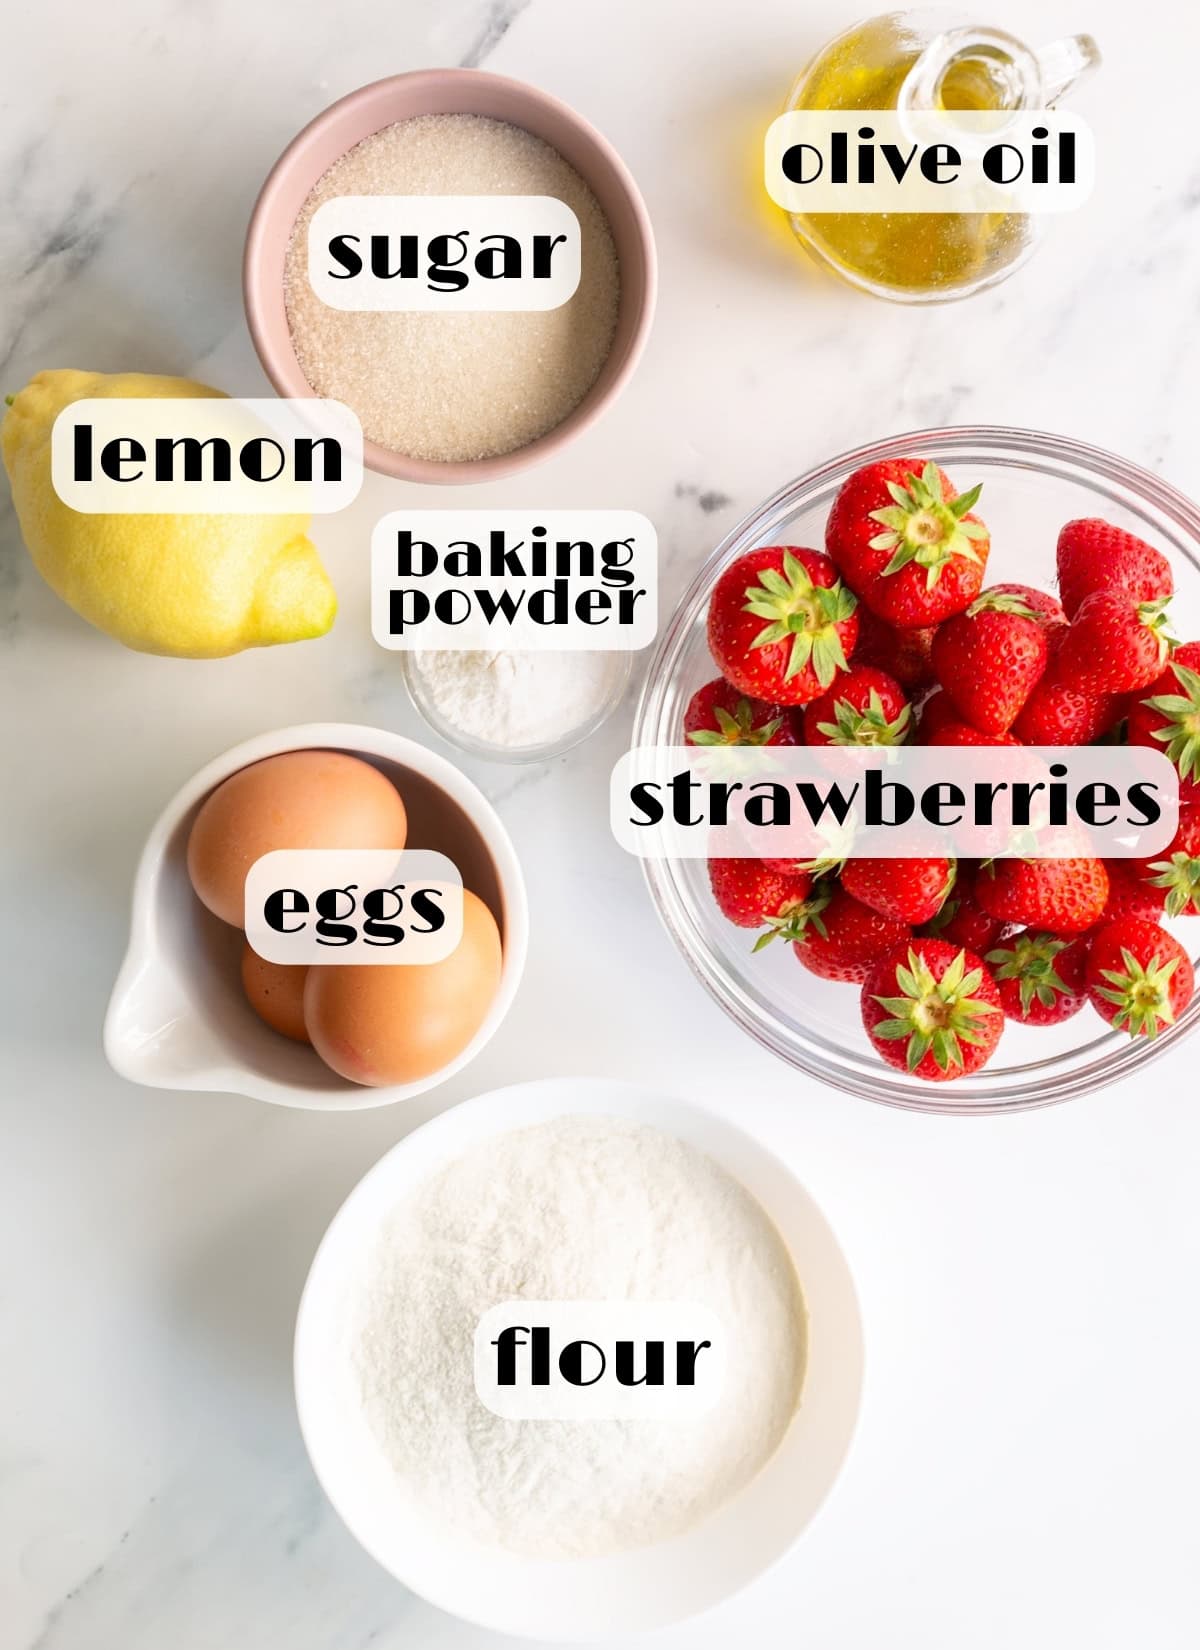 italian strawberry cake ingredients: strawberries, olive oil, sugar, flour, lemon, eggs, baking powder.